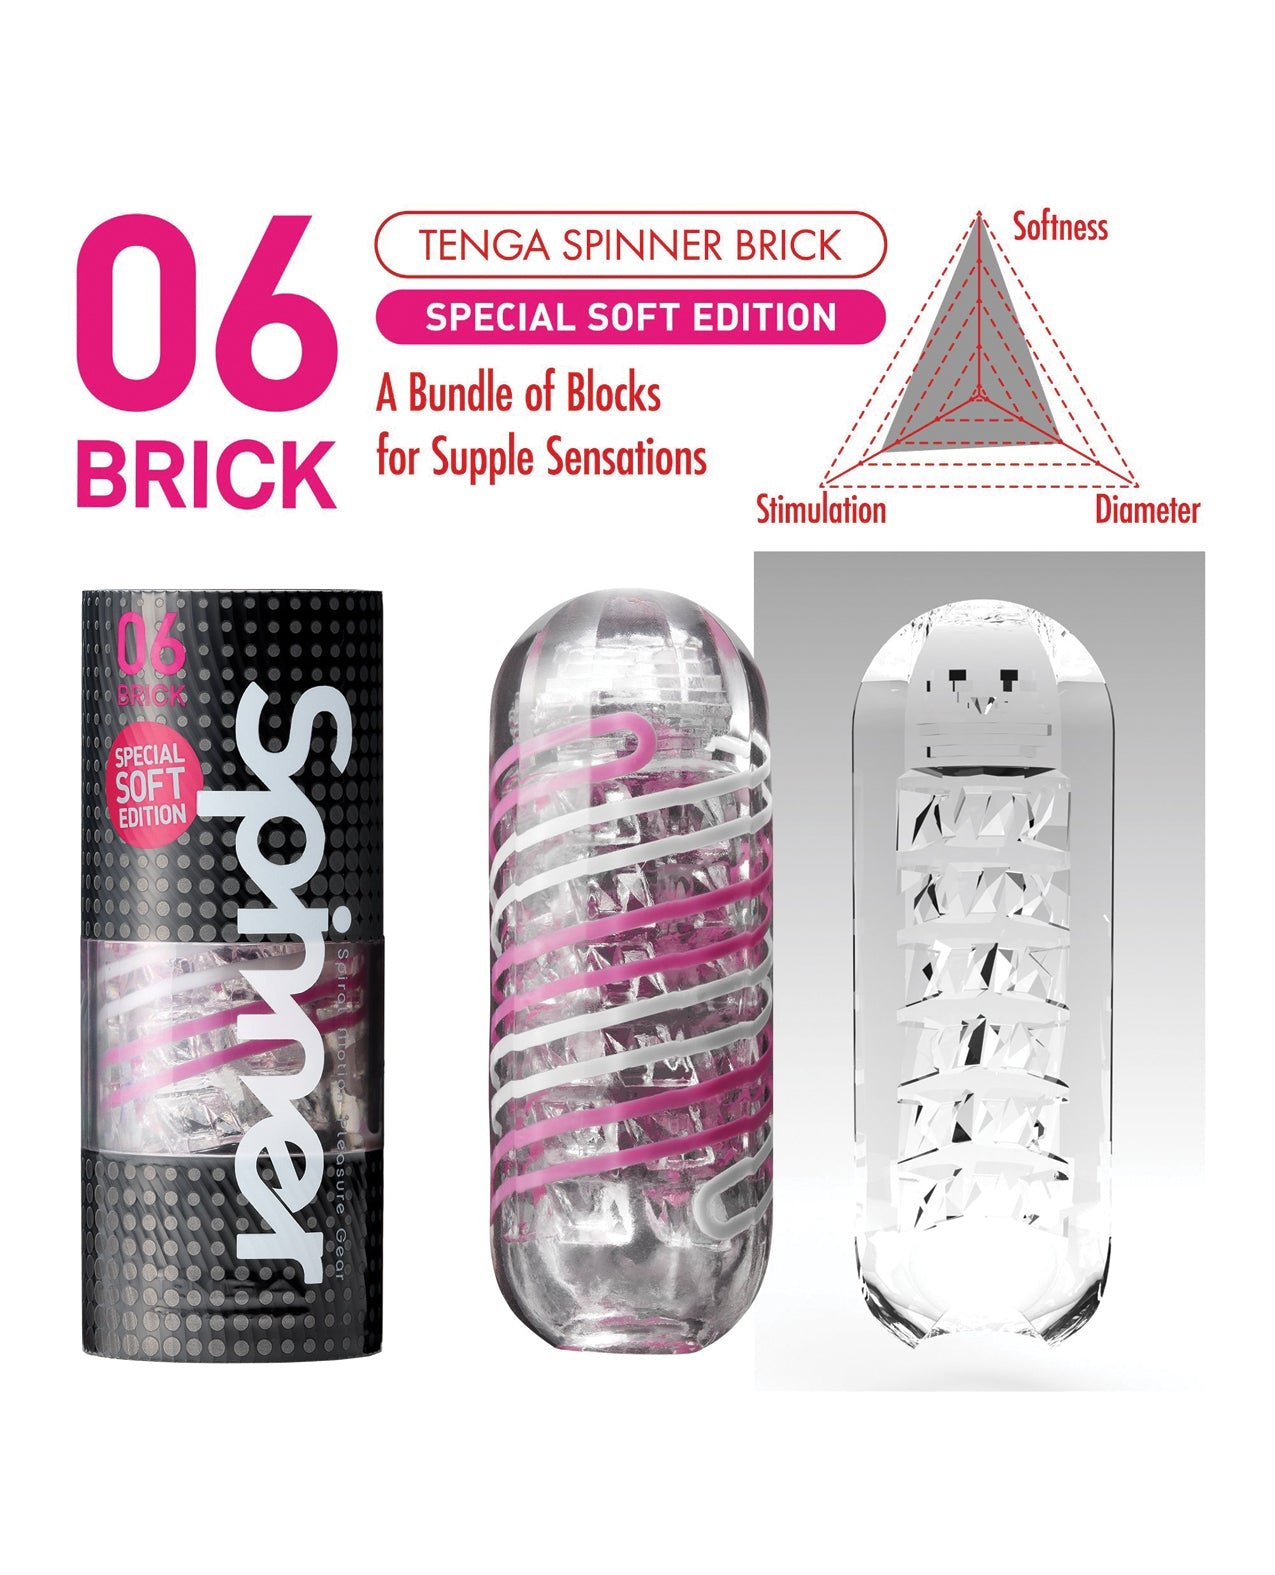 Tenga Spinner Brick - Special Soft Edition